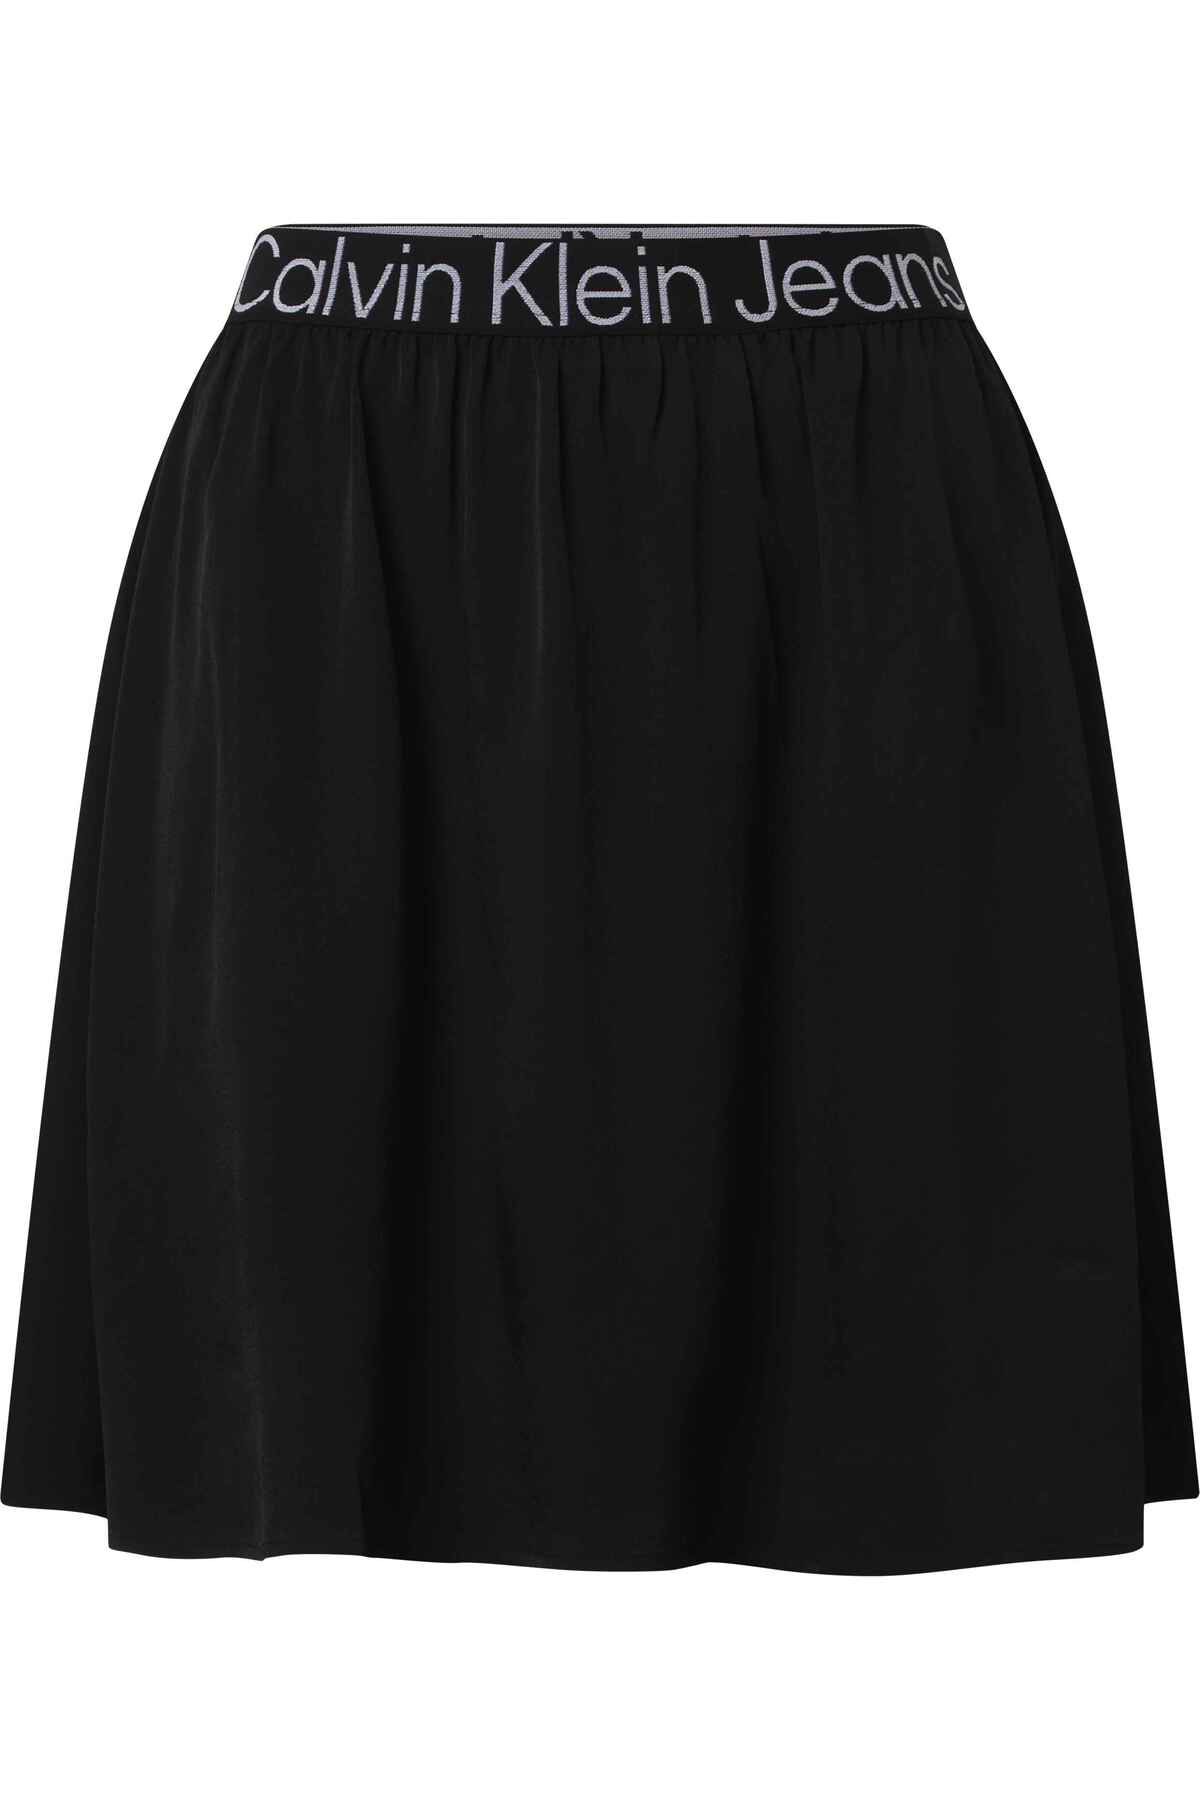 Calvin Klein Logo Elastic Mini Skirt